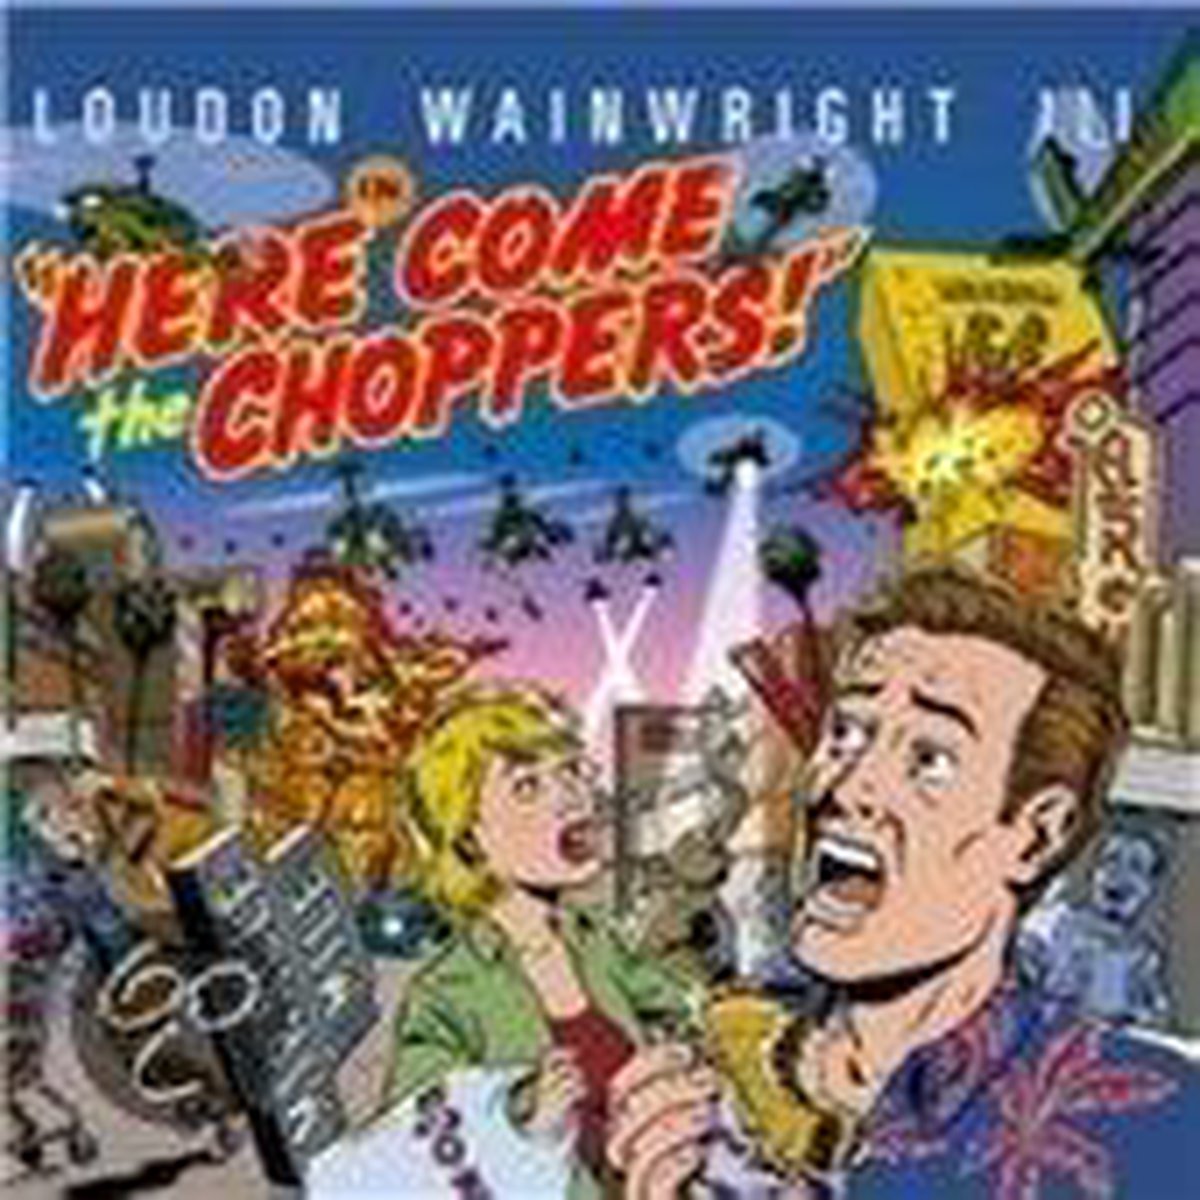 Here Come The Choppers - Loudon -Iii- Wainwright